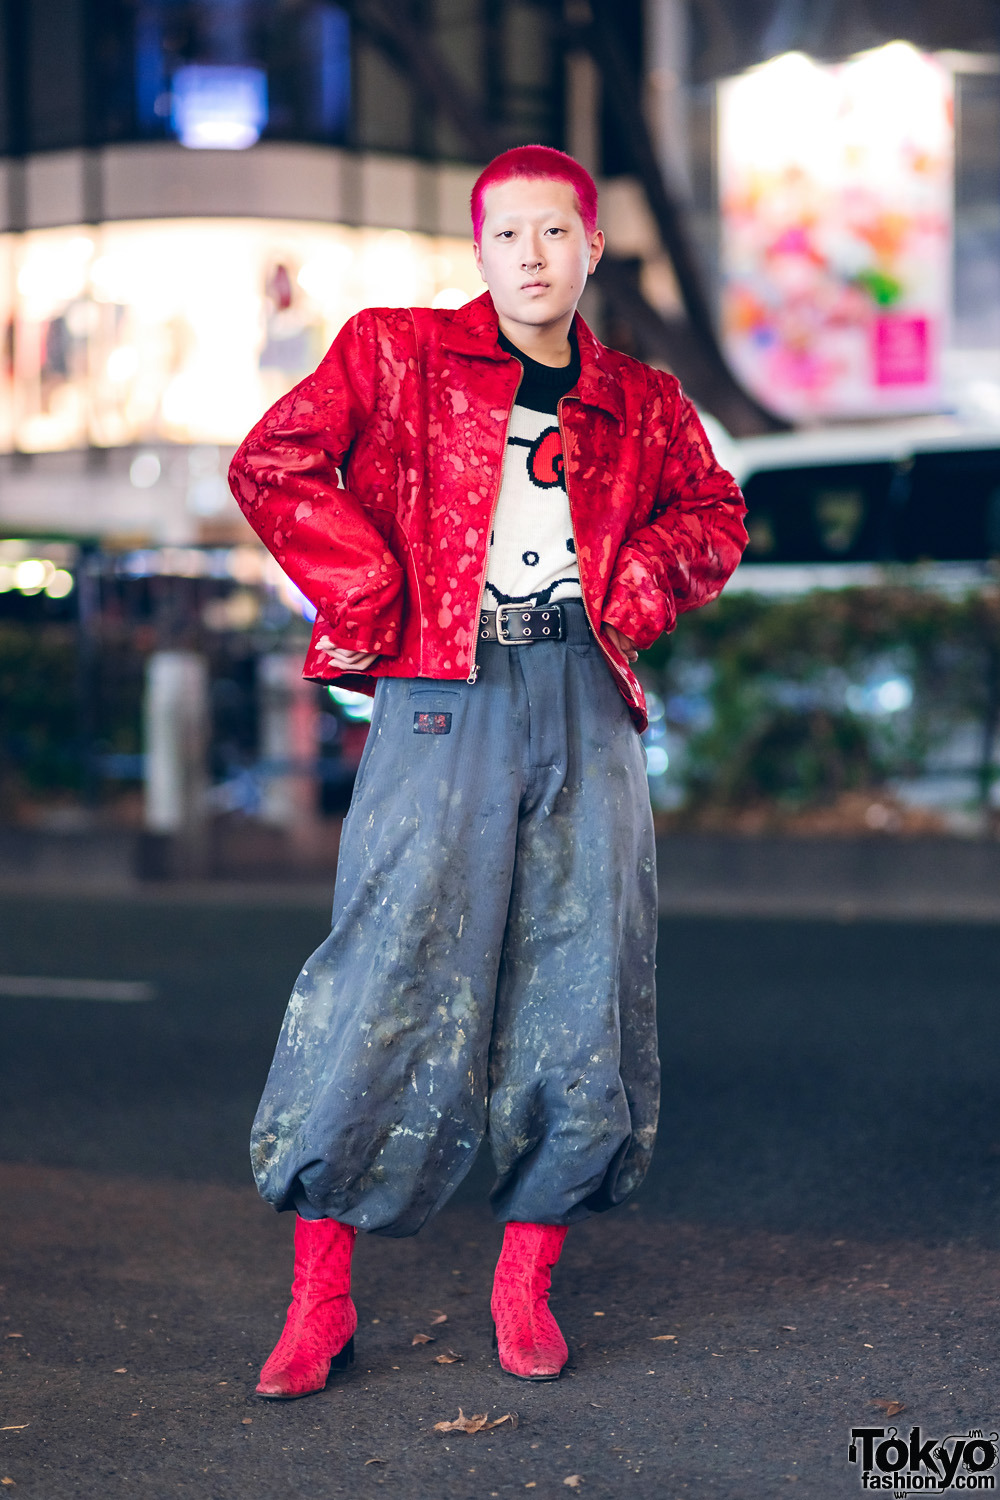 tokyo-fashion:  17-year-old Japanese student Kaoru on the street in Harajuku. He